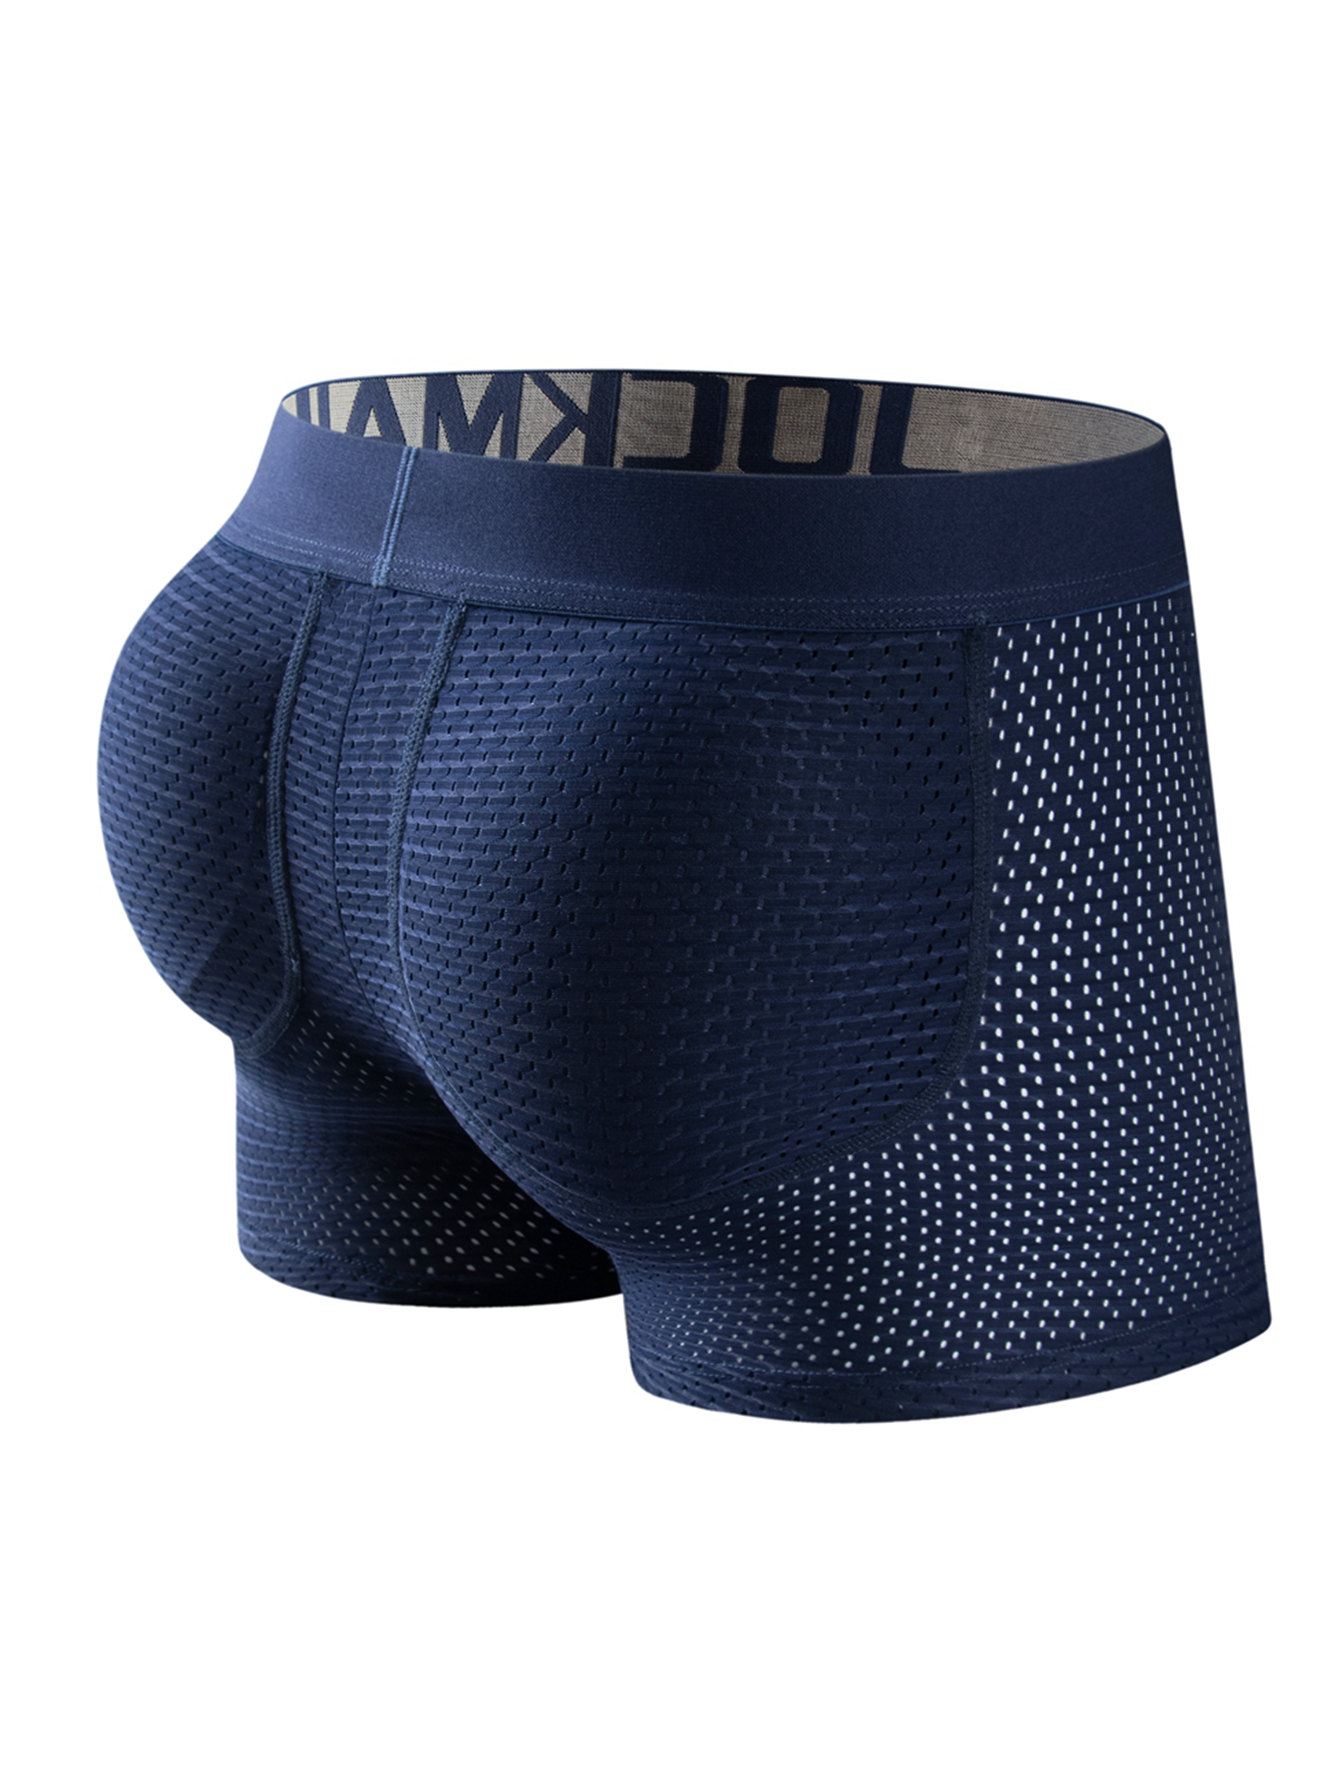 2pcs Men Boxers Briefs Mesh Trunks Underwear Padded Removable Hip up Butt  Pads